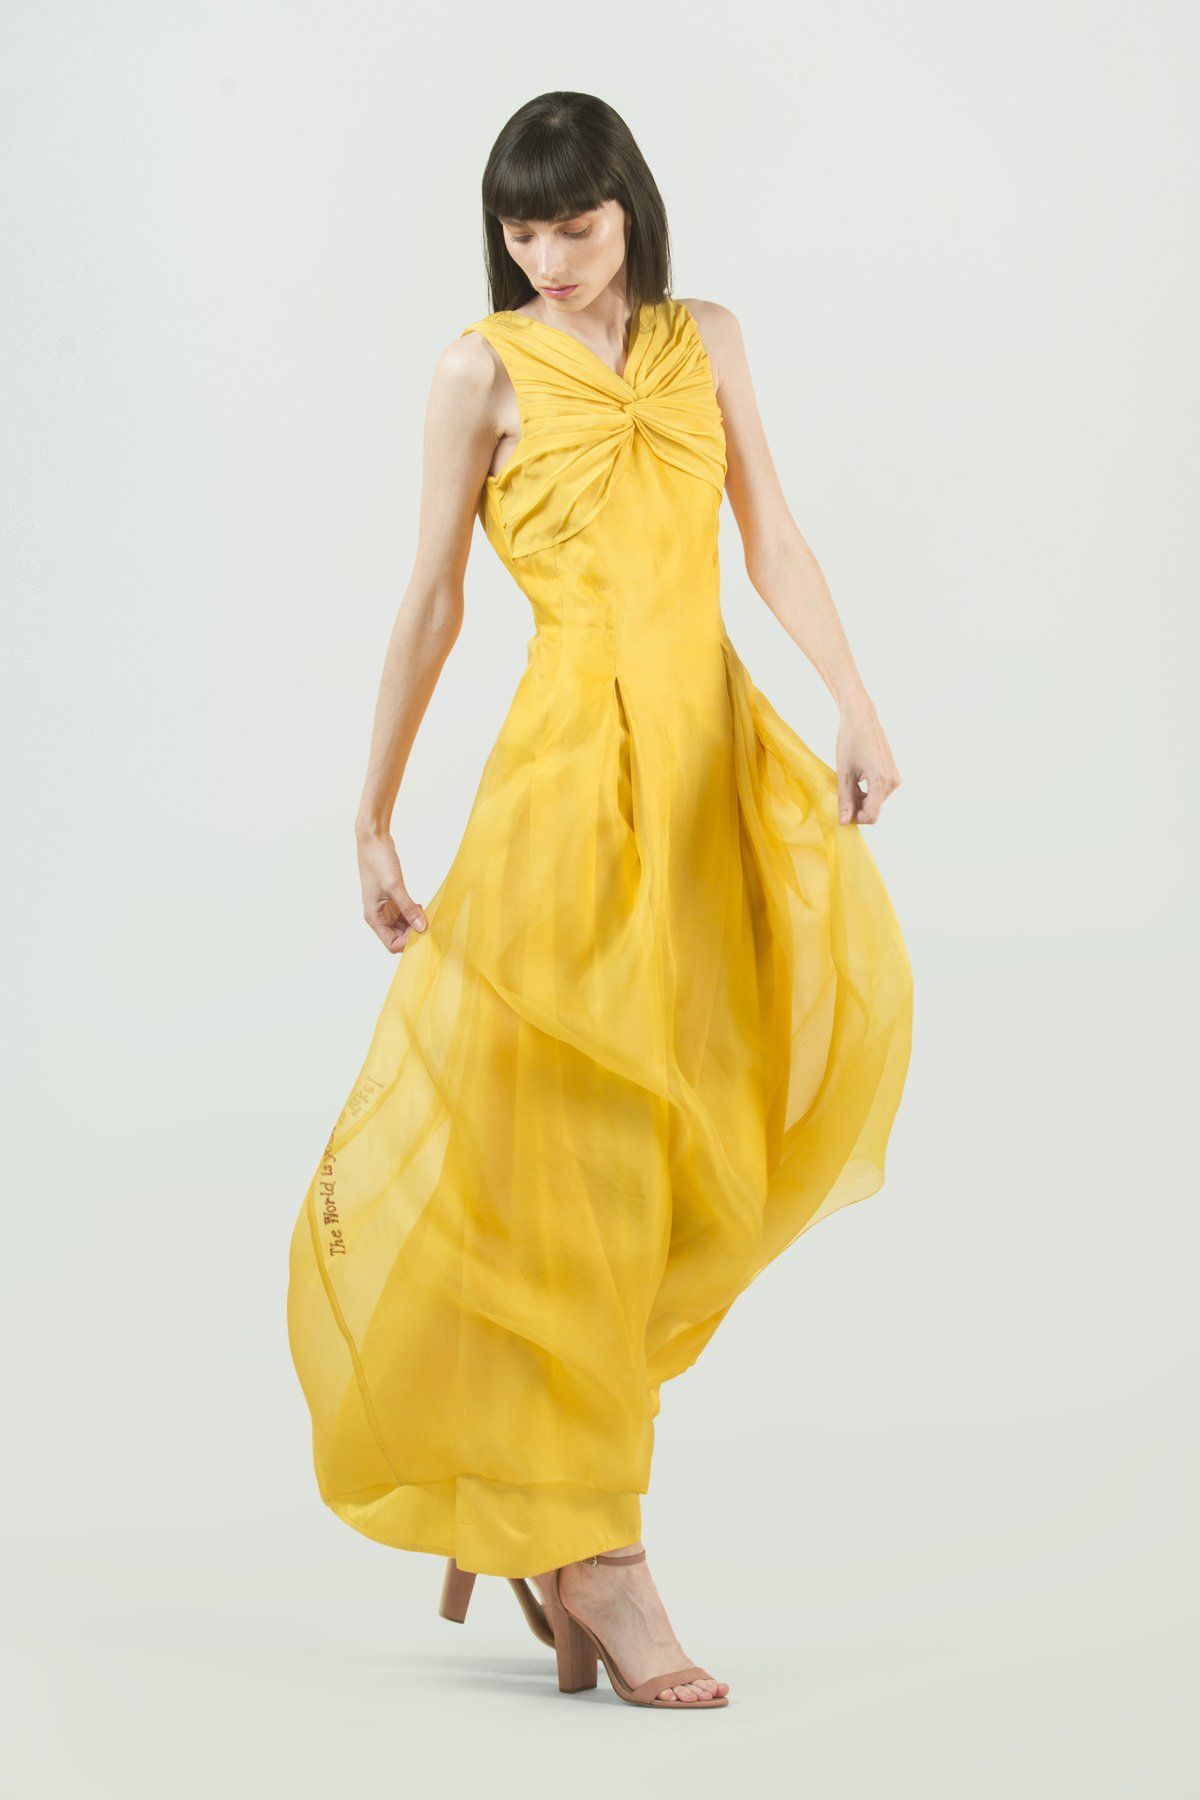 Yellow Cocktail Dress Ideas